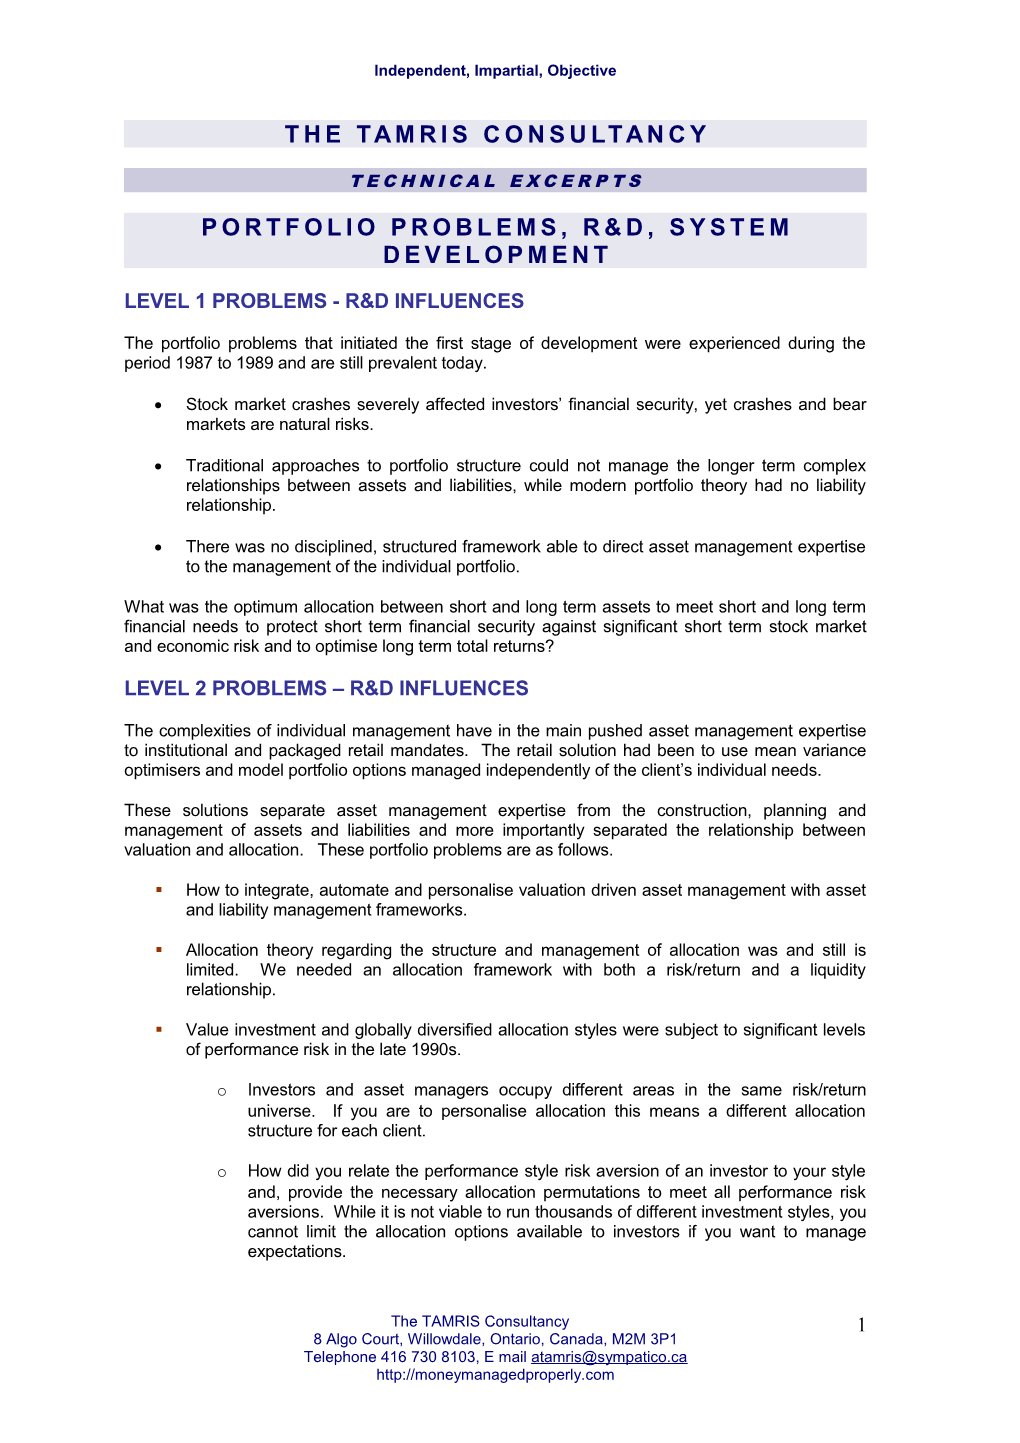 Portfolio Problems, R&D, System Development